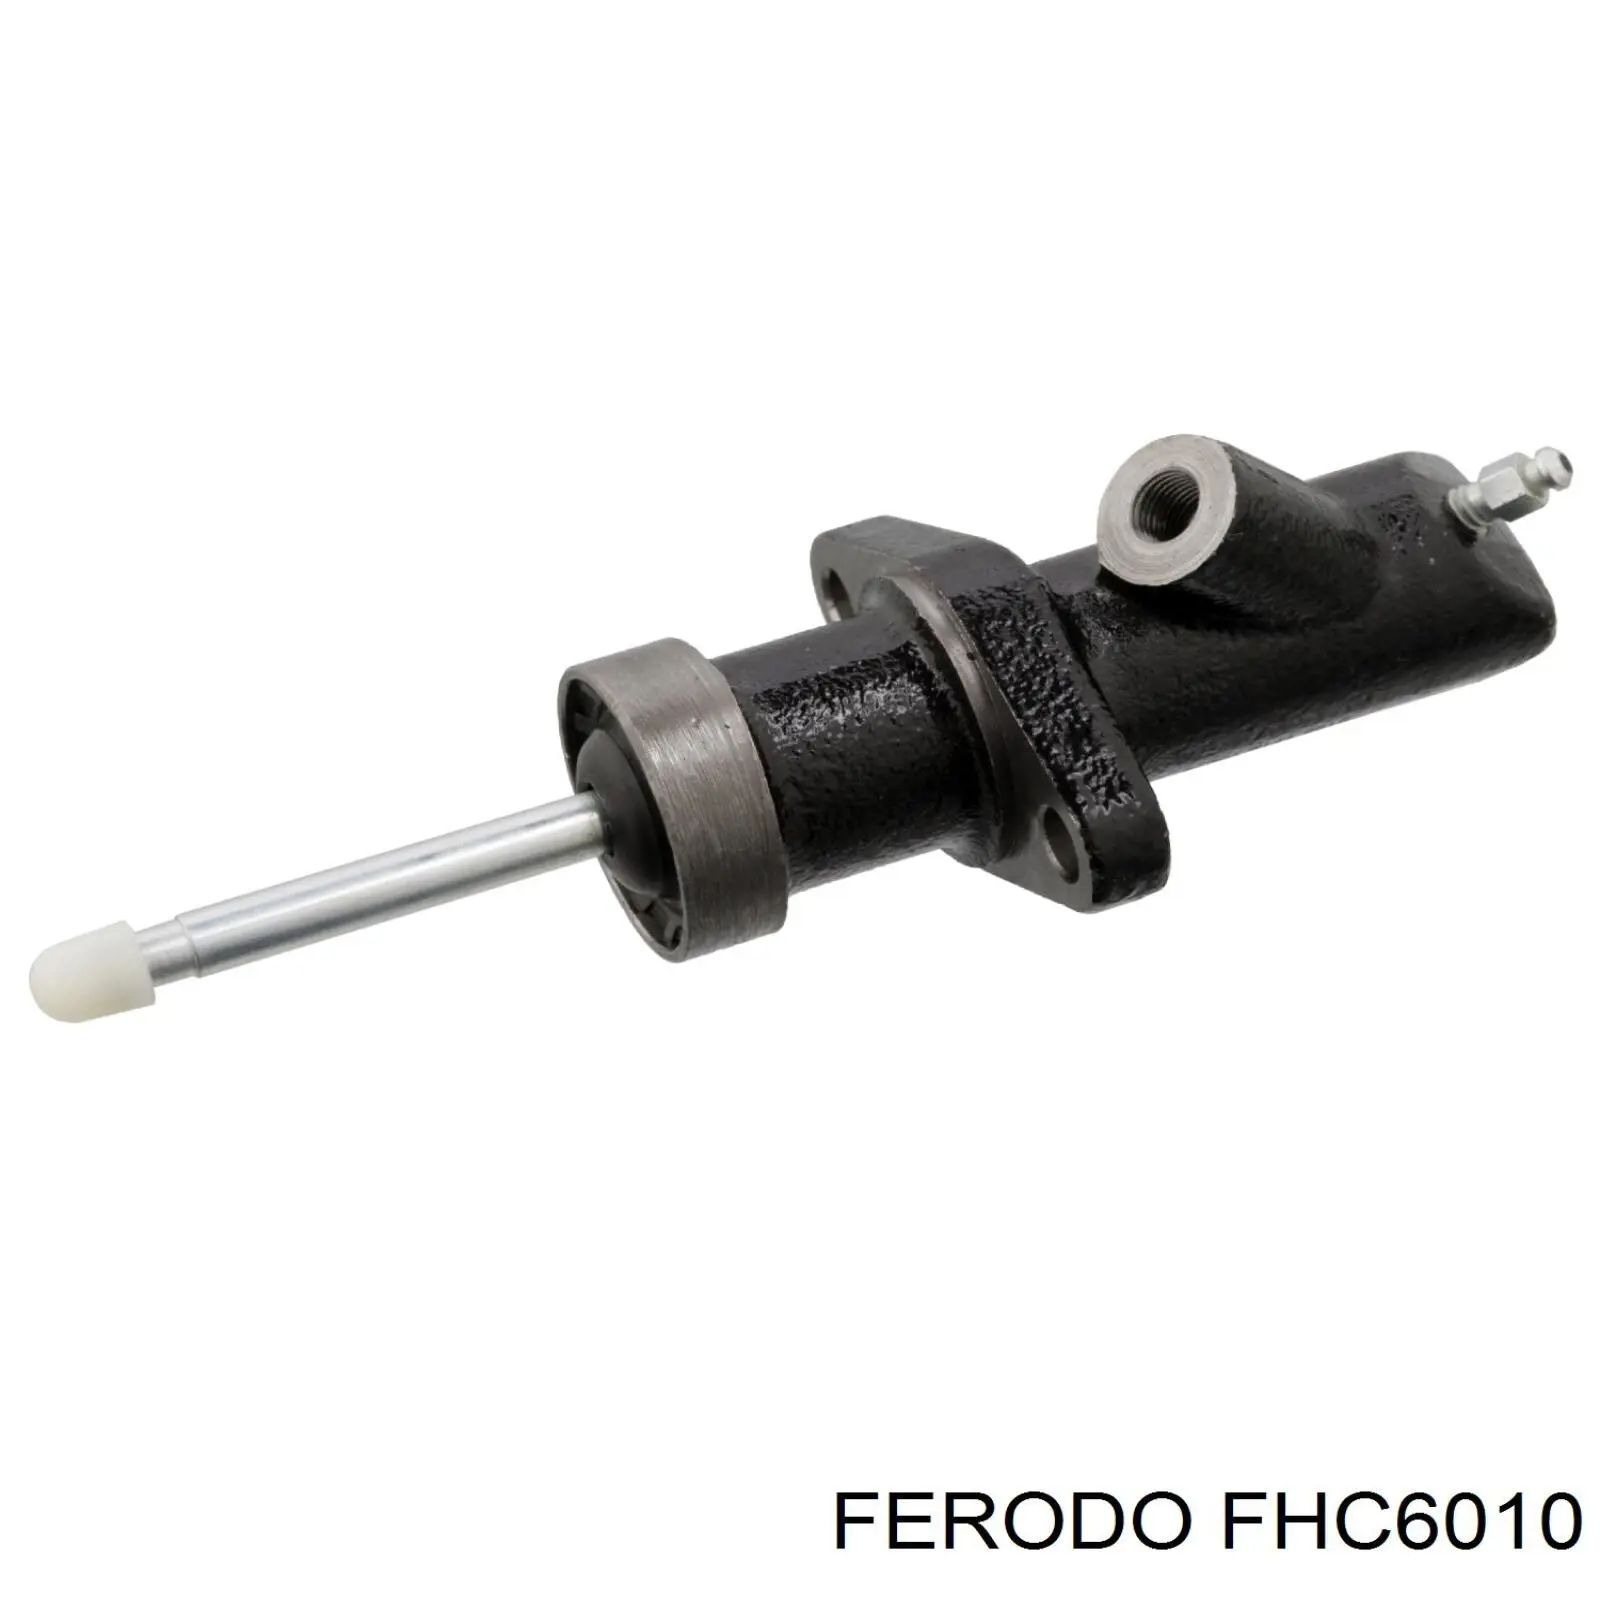 FHC6010 Ferodo цилиндр сцепления рабочий